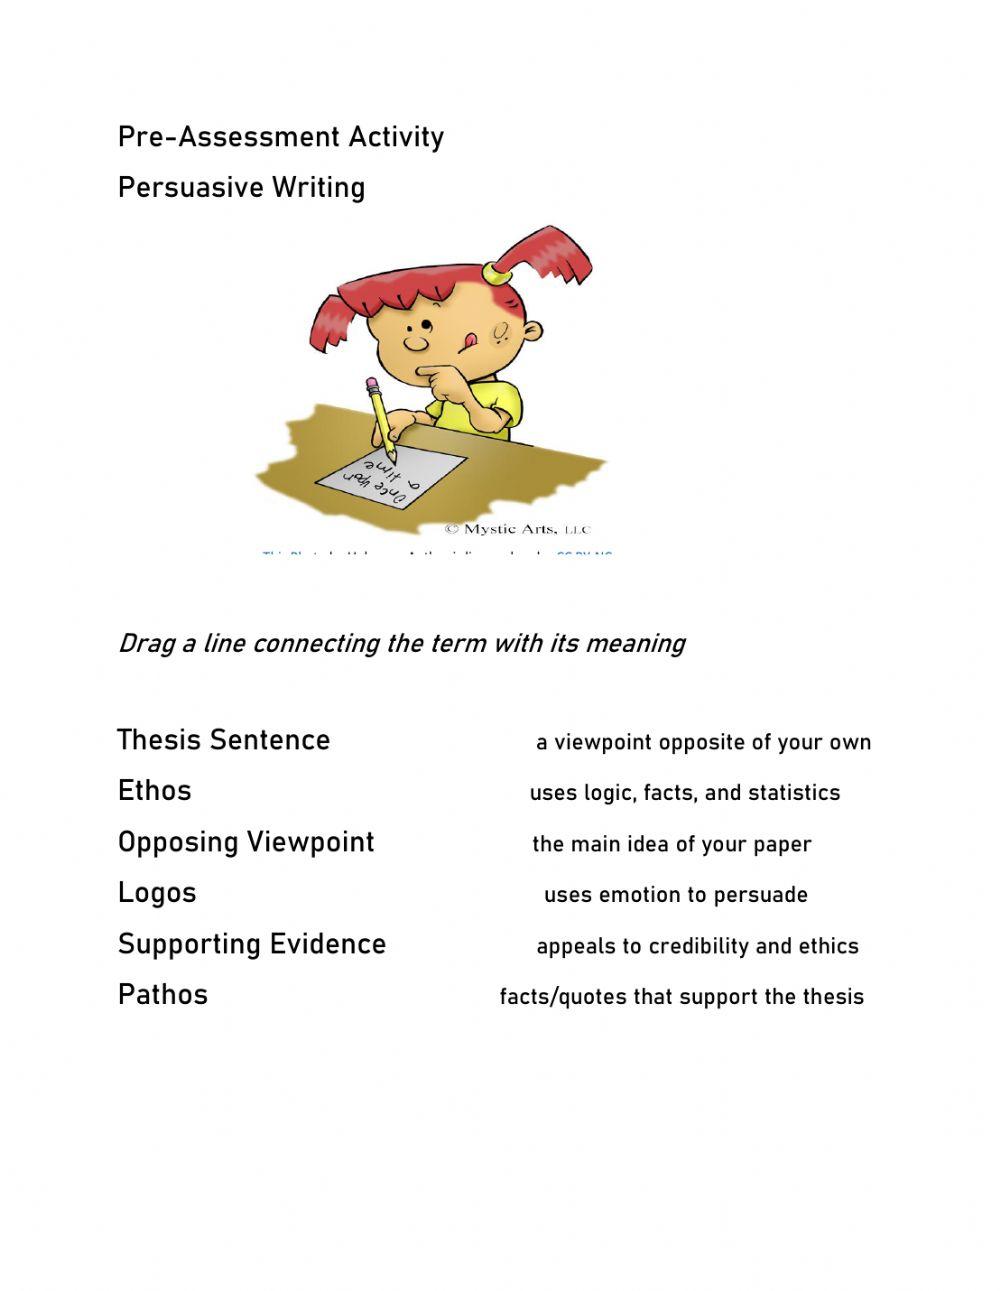 Pre-Assessment Persuasive Writing